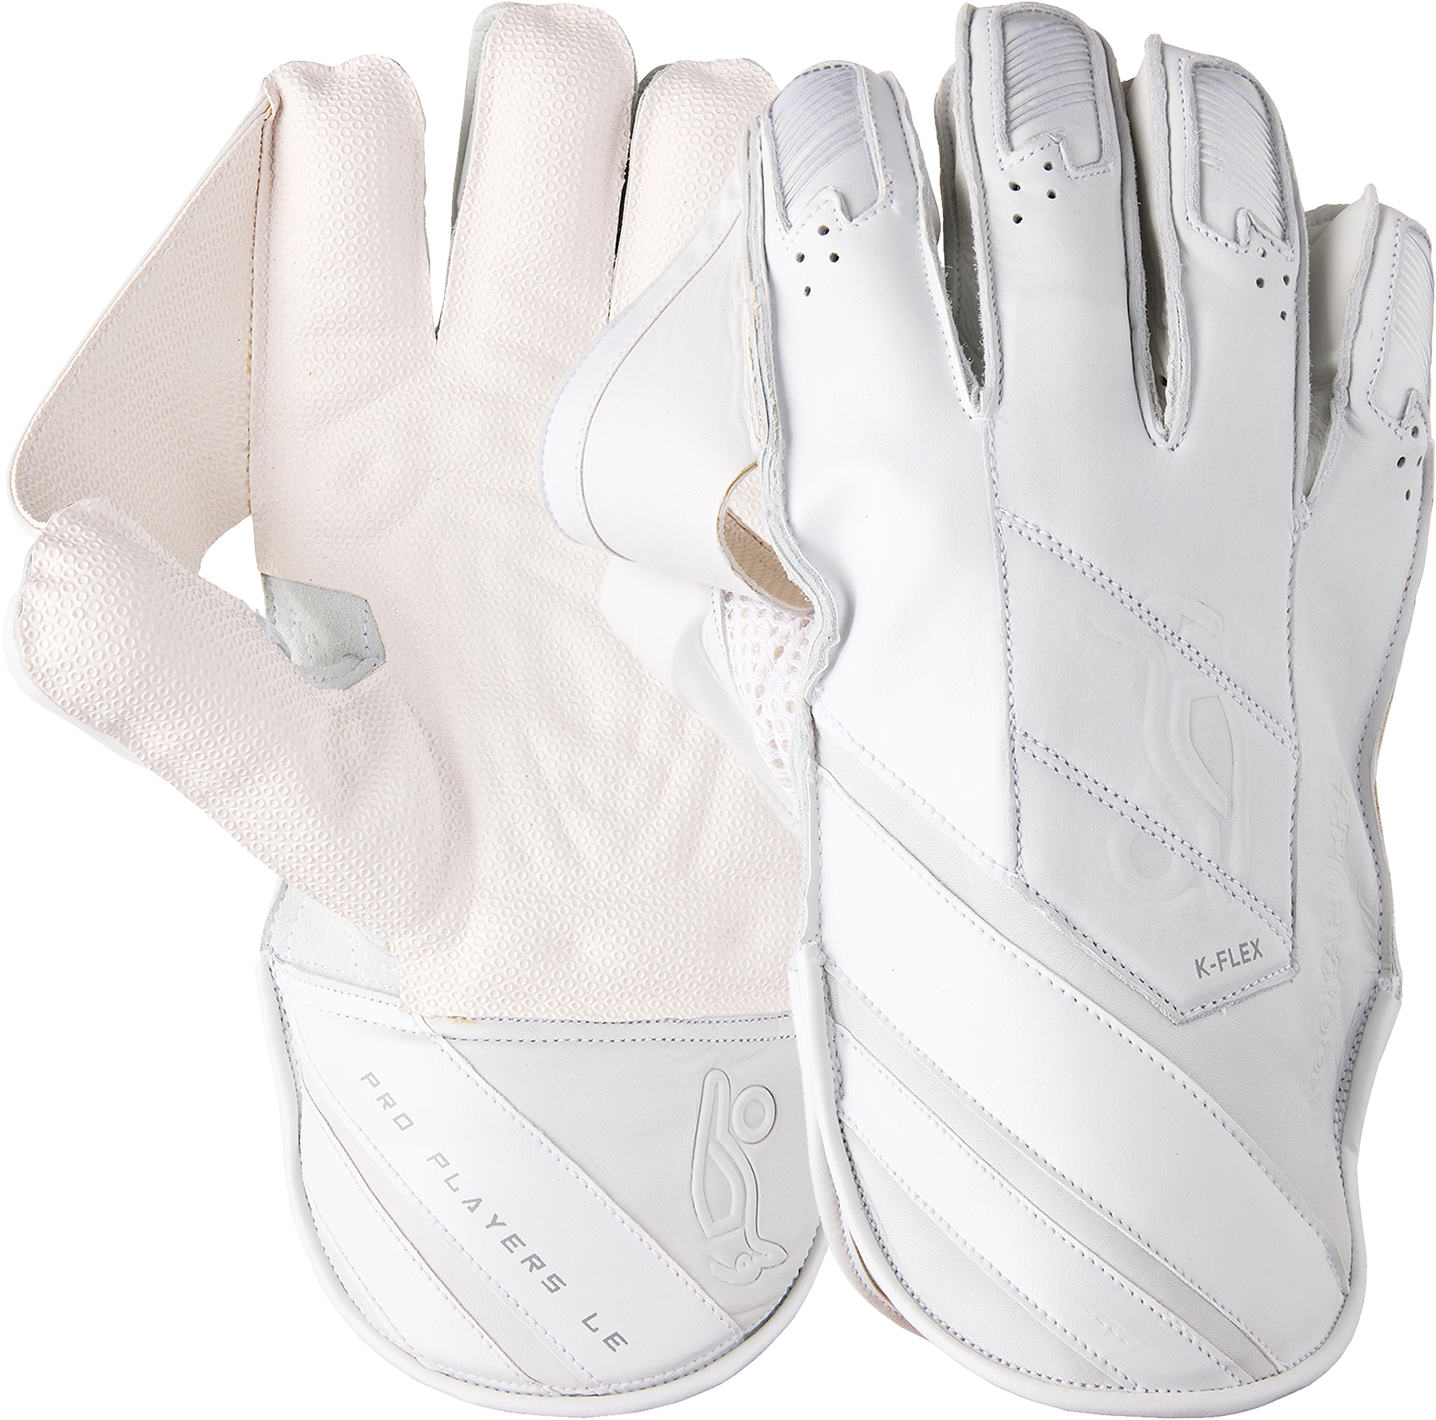 Kookaburra Ghost Pro 1.0 Wicketkeeping Gloves 3J12191